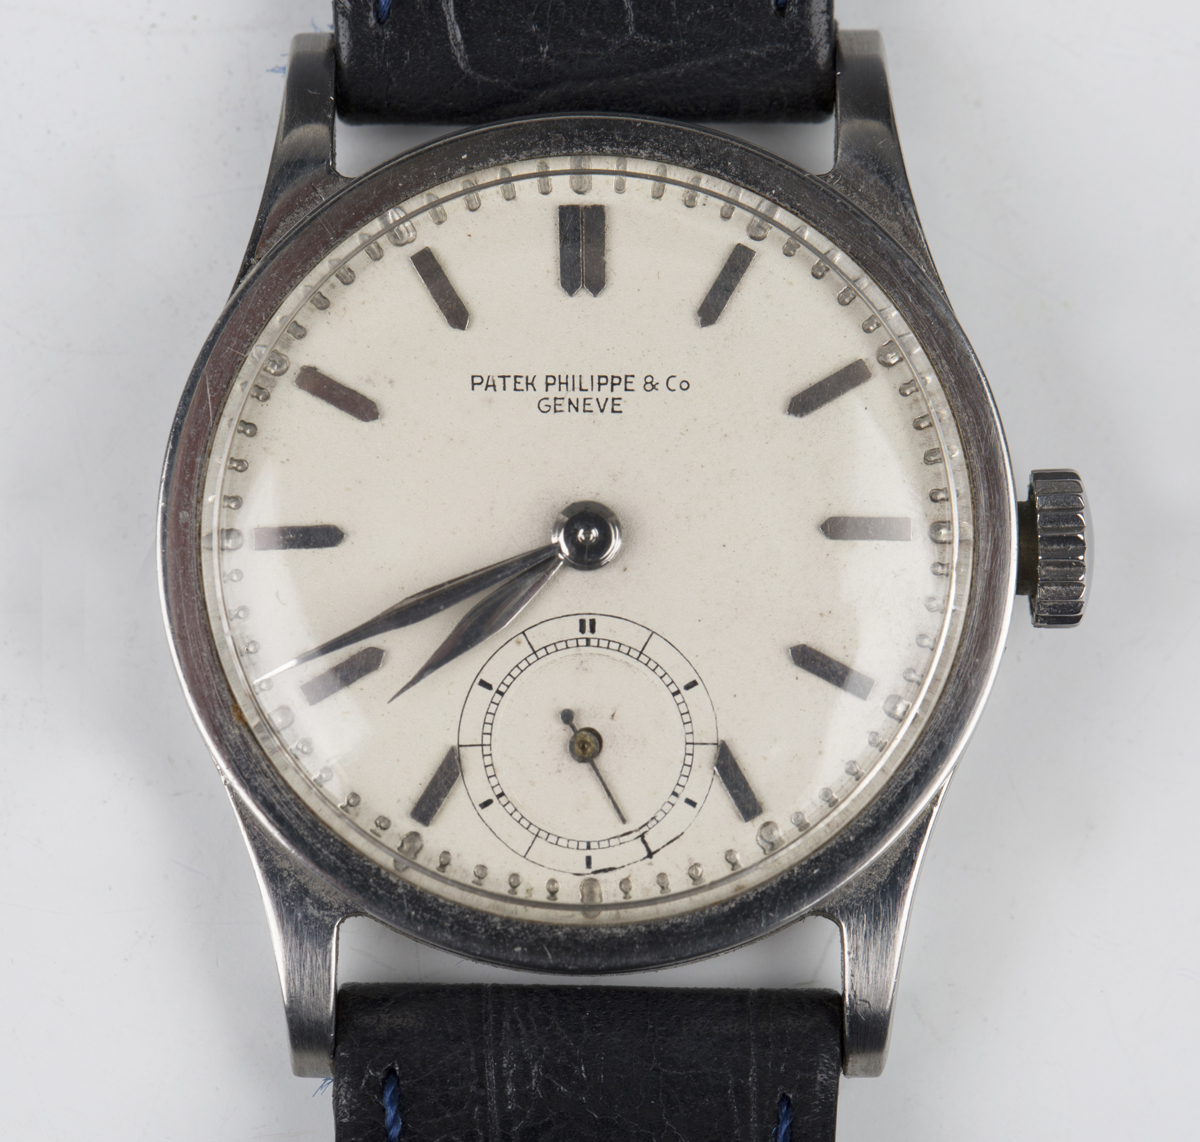 A Patek Philippe stainless steel circular cased gentleman's wristwatch, Ref. 96, circa 1940, the